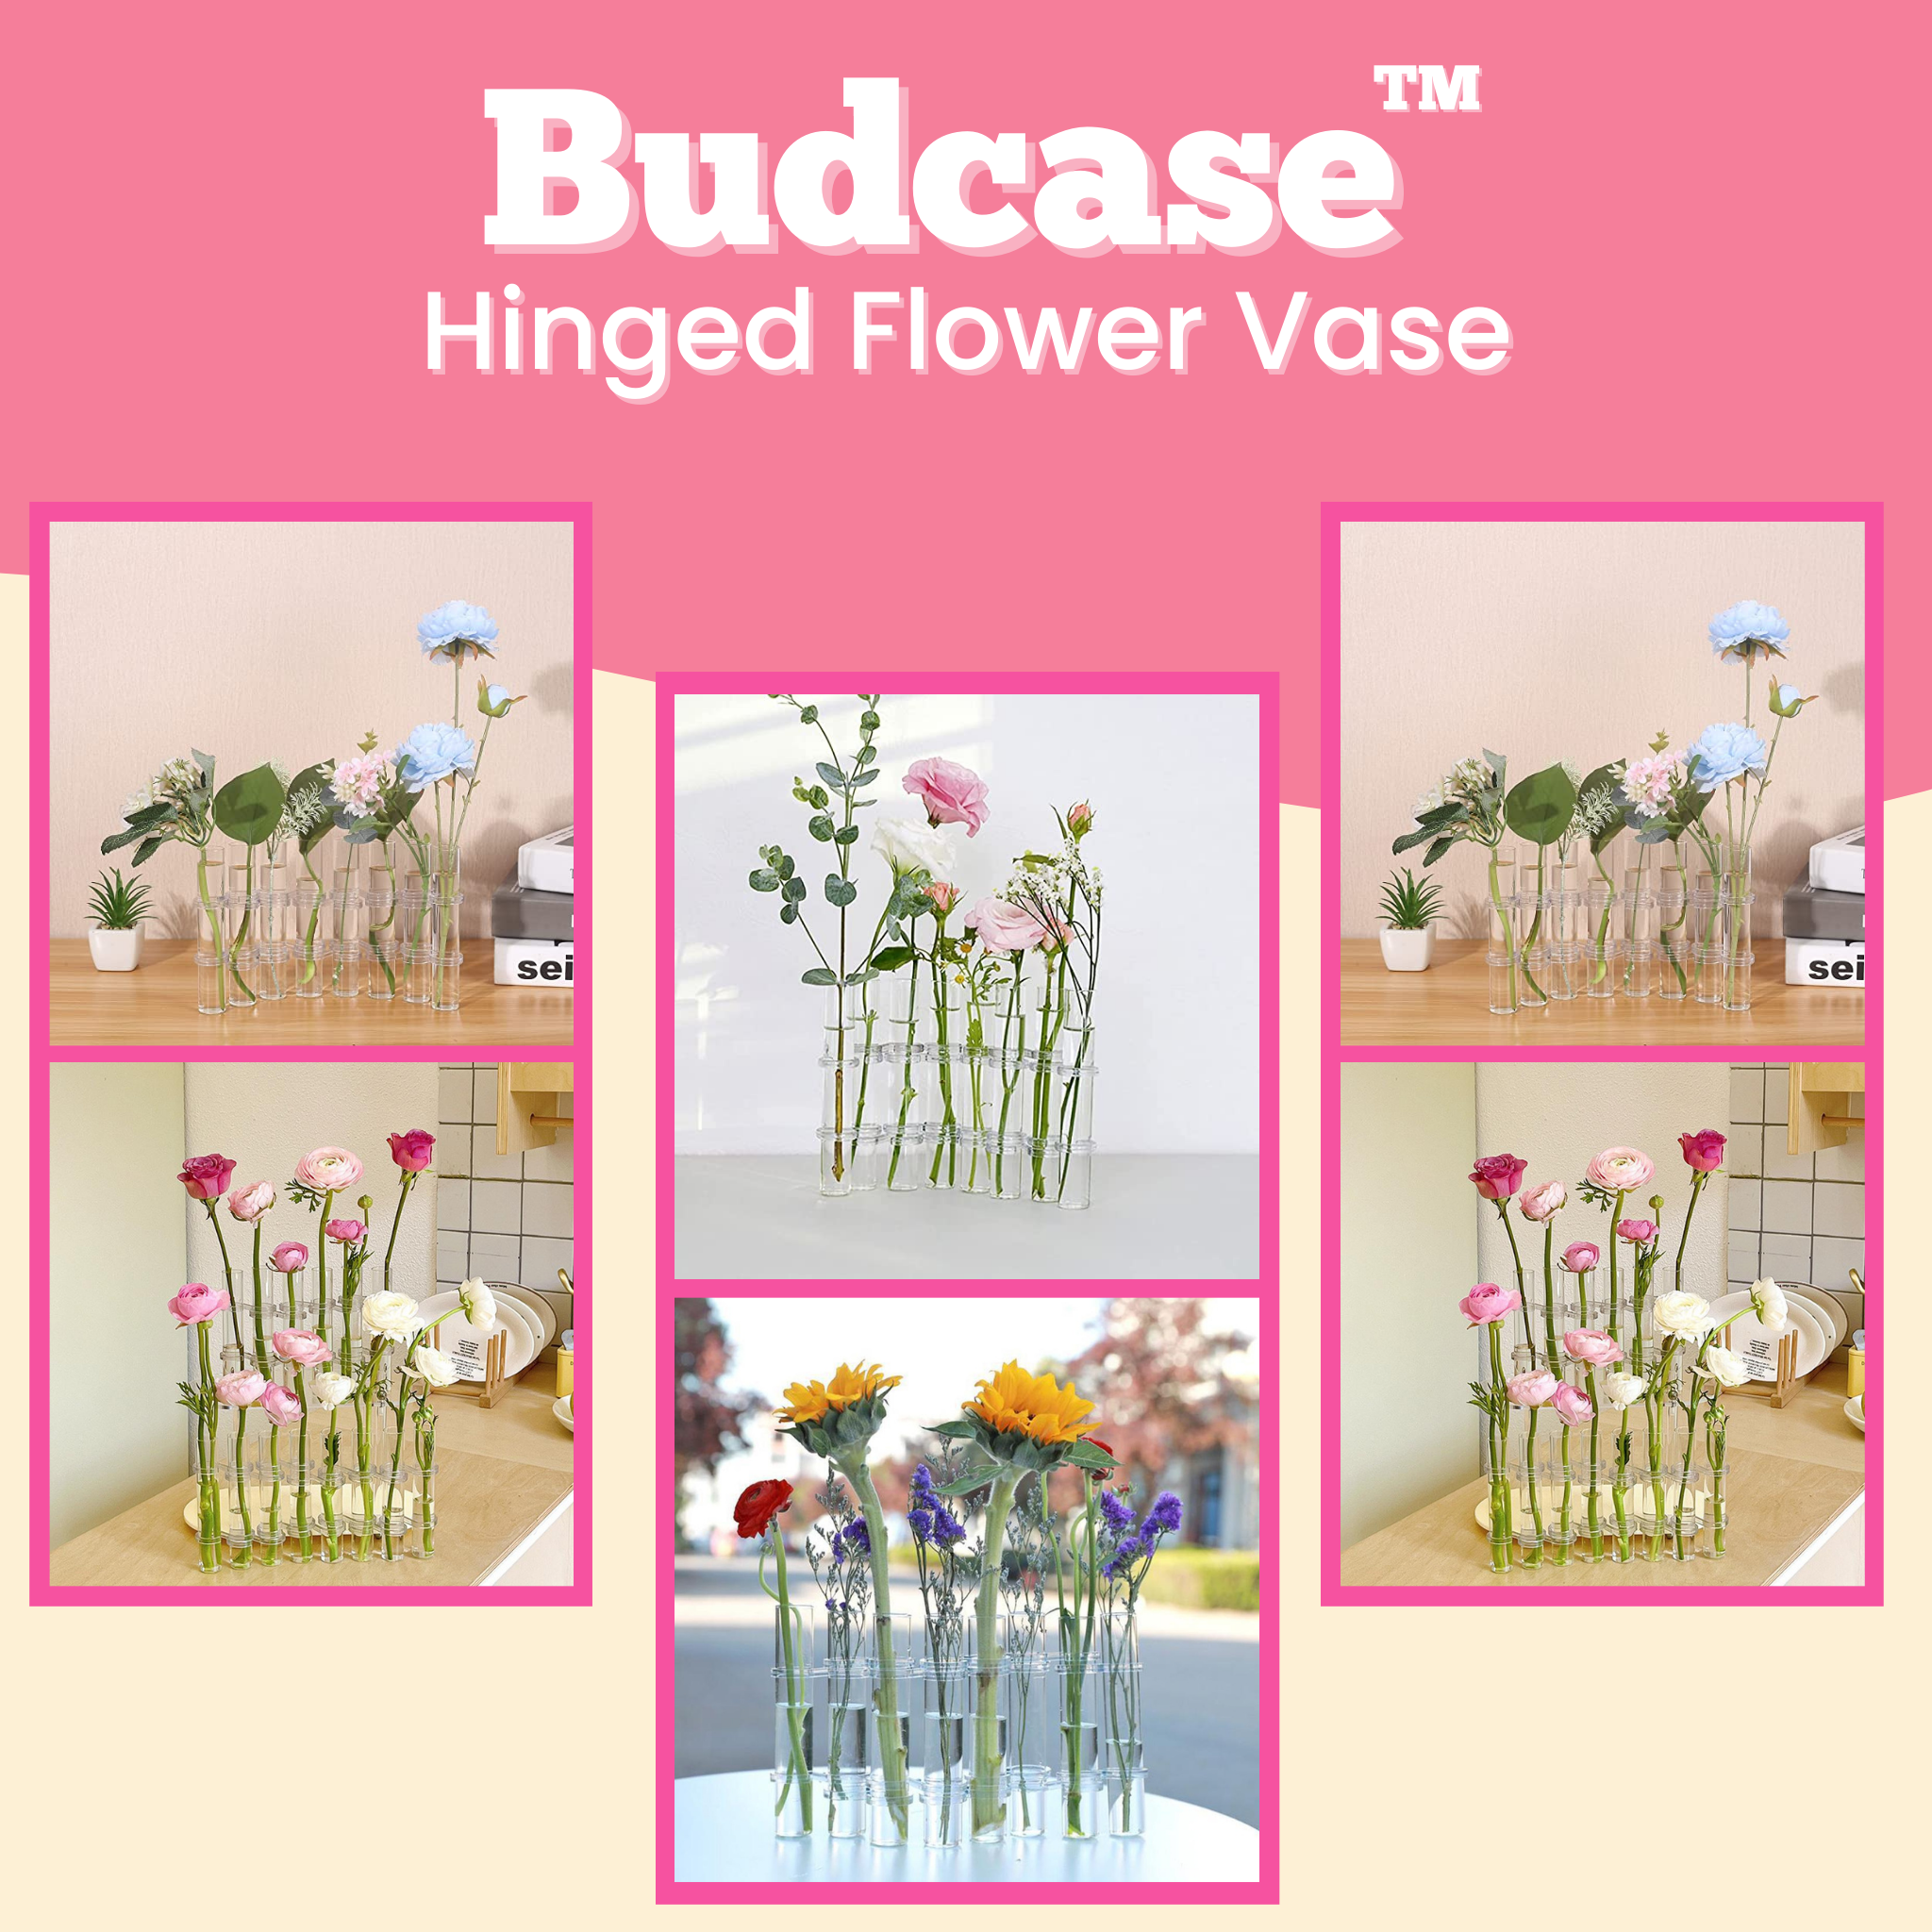 Budcase™ Hinged Flower Vases